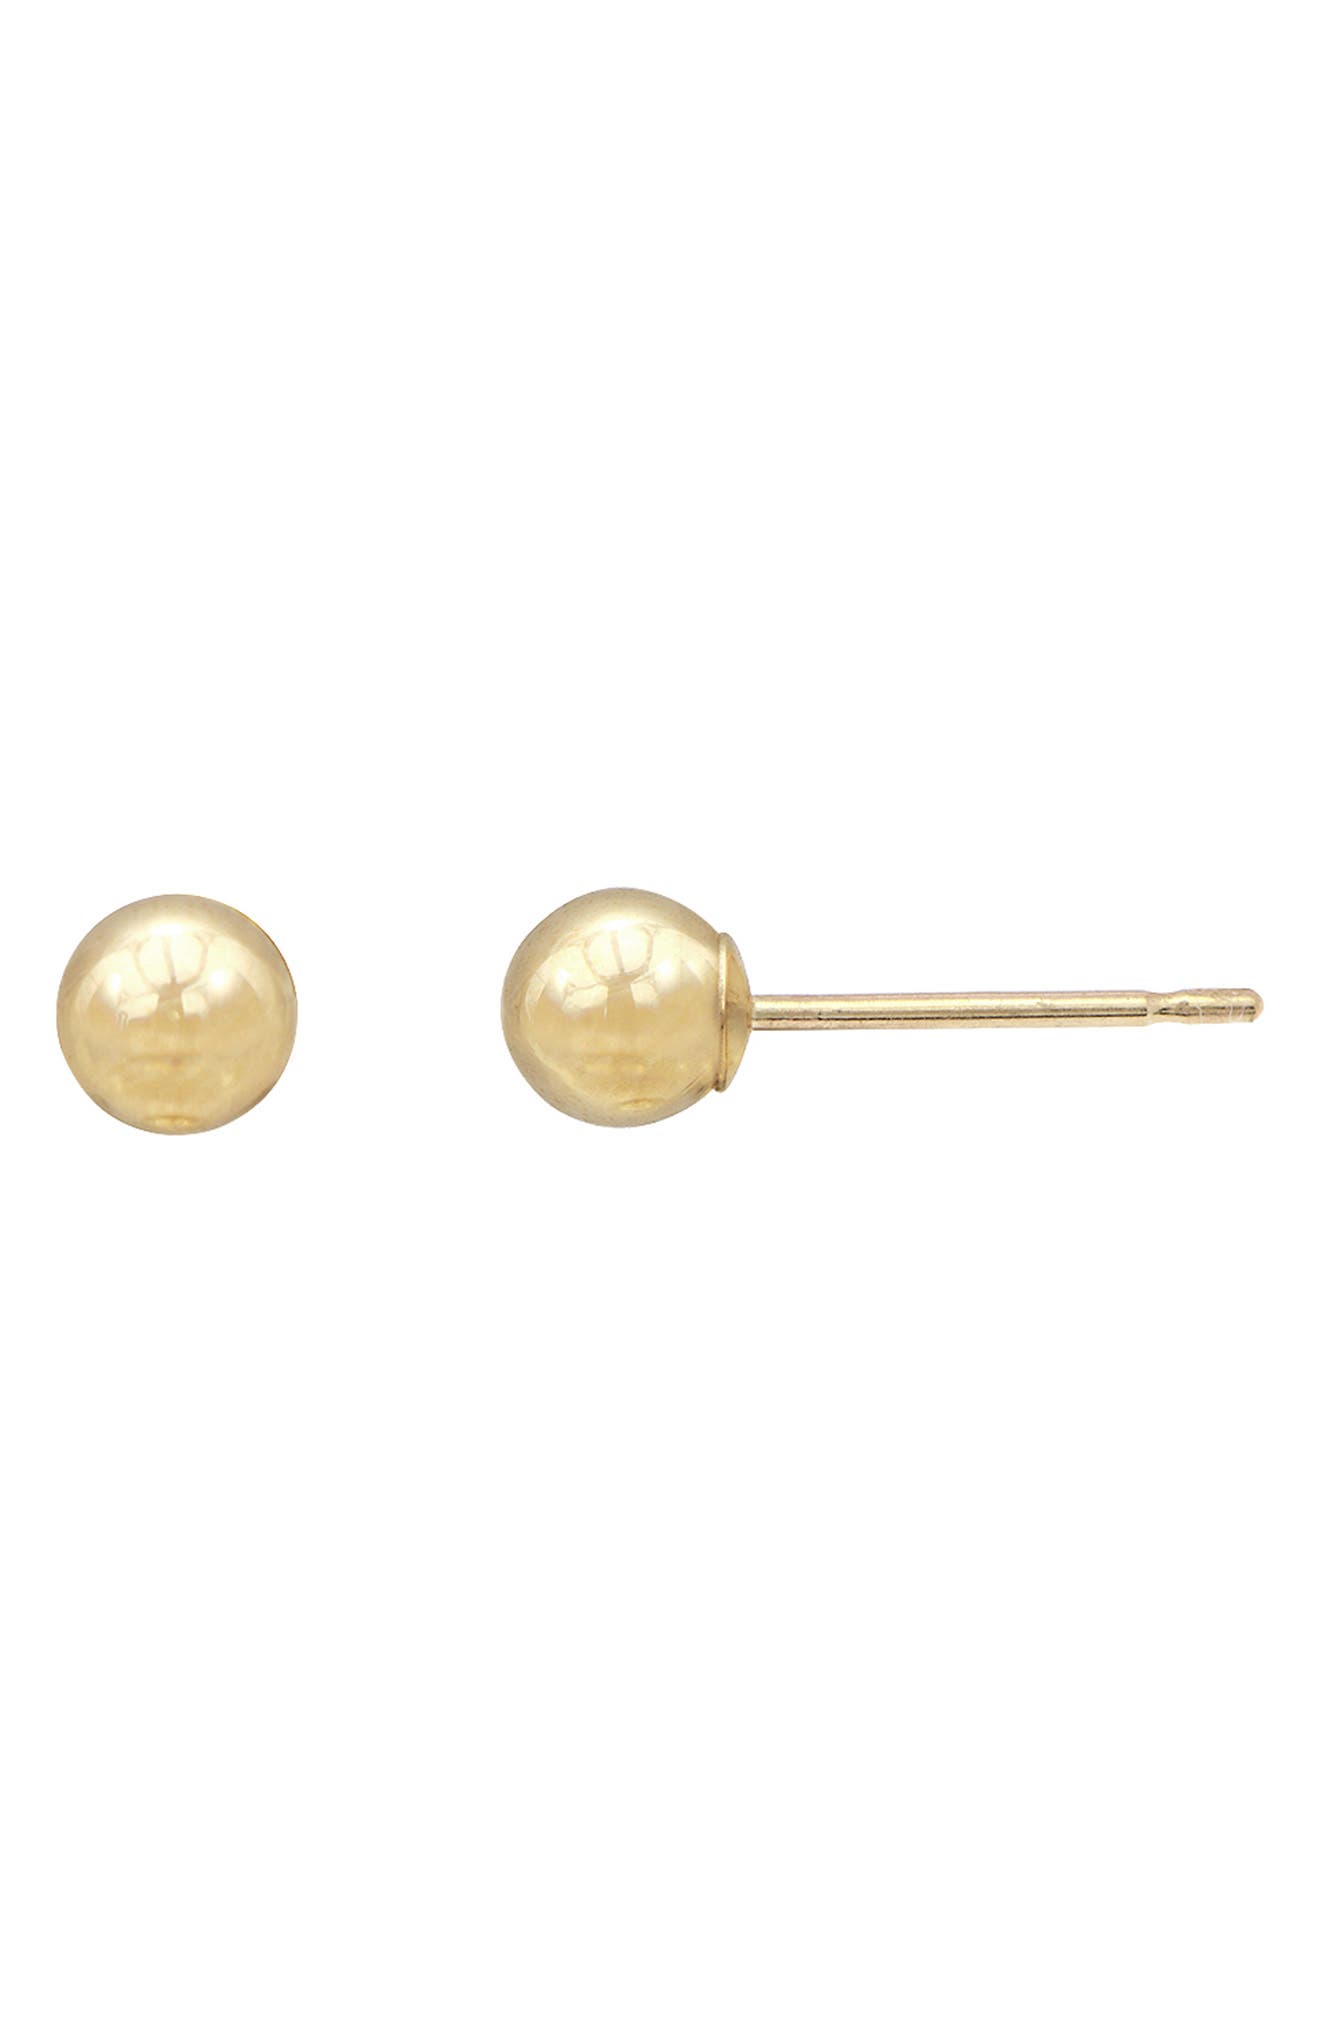 14K Gold Polished 3mm Ball Post Earrings